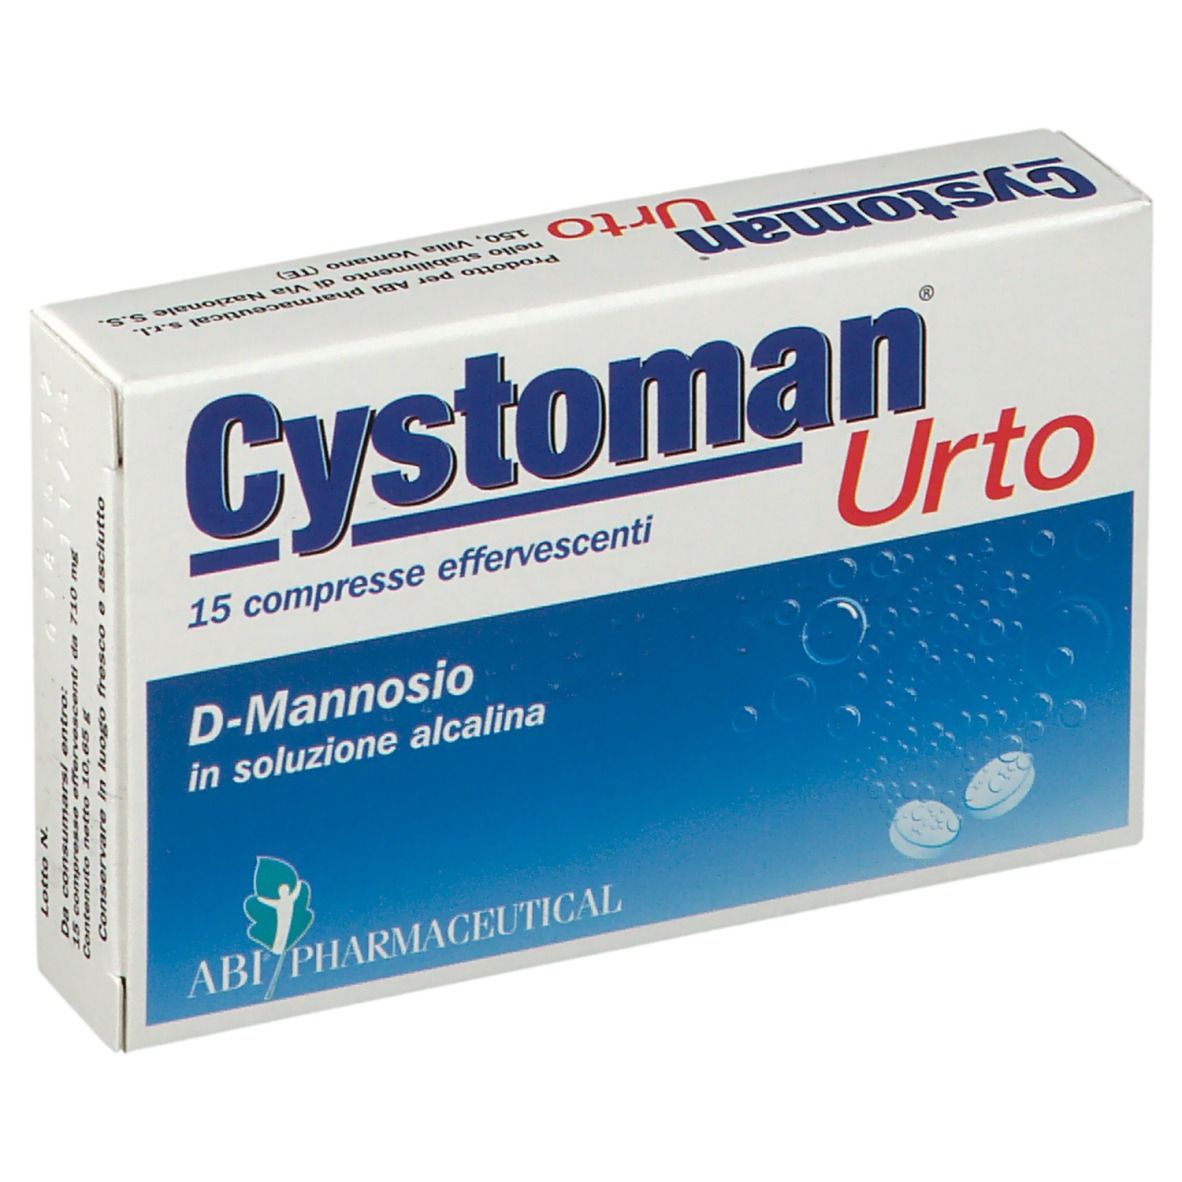 Cystoman® Urto